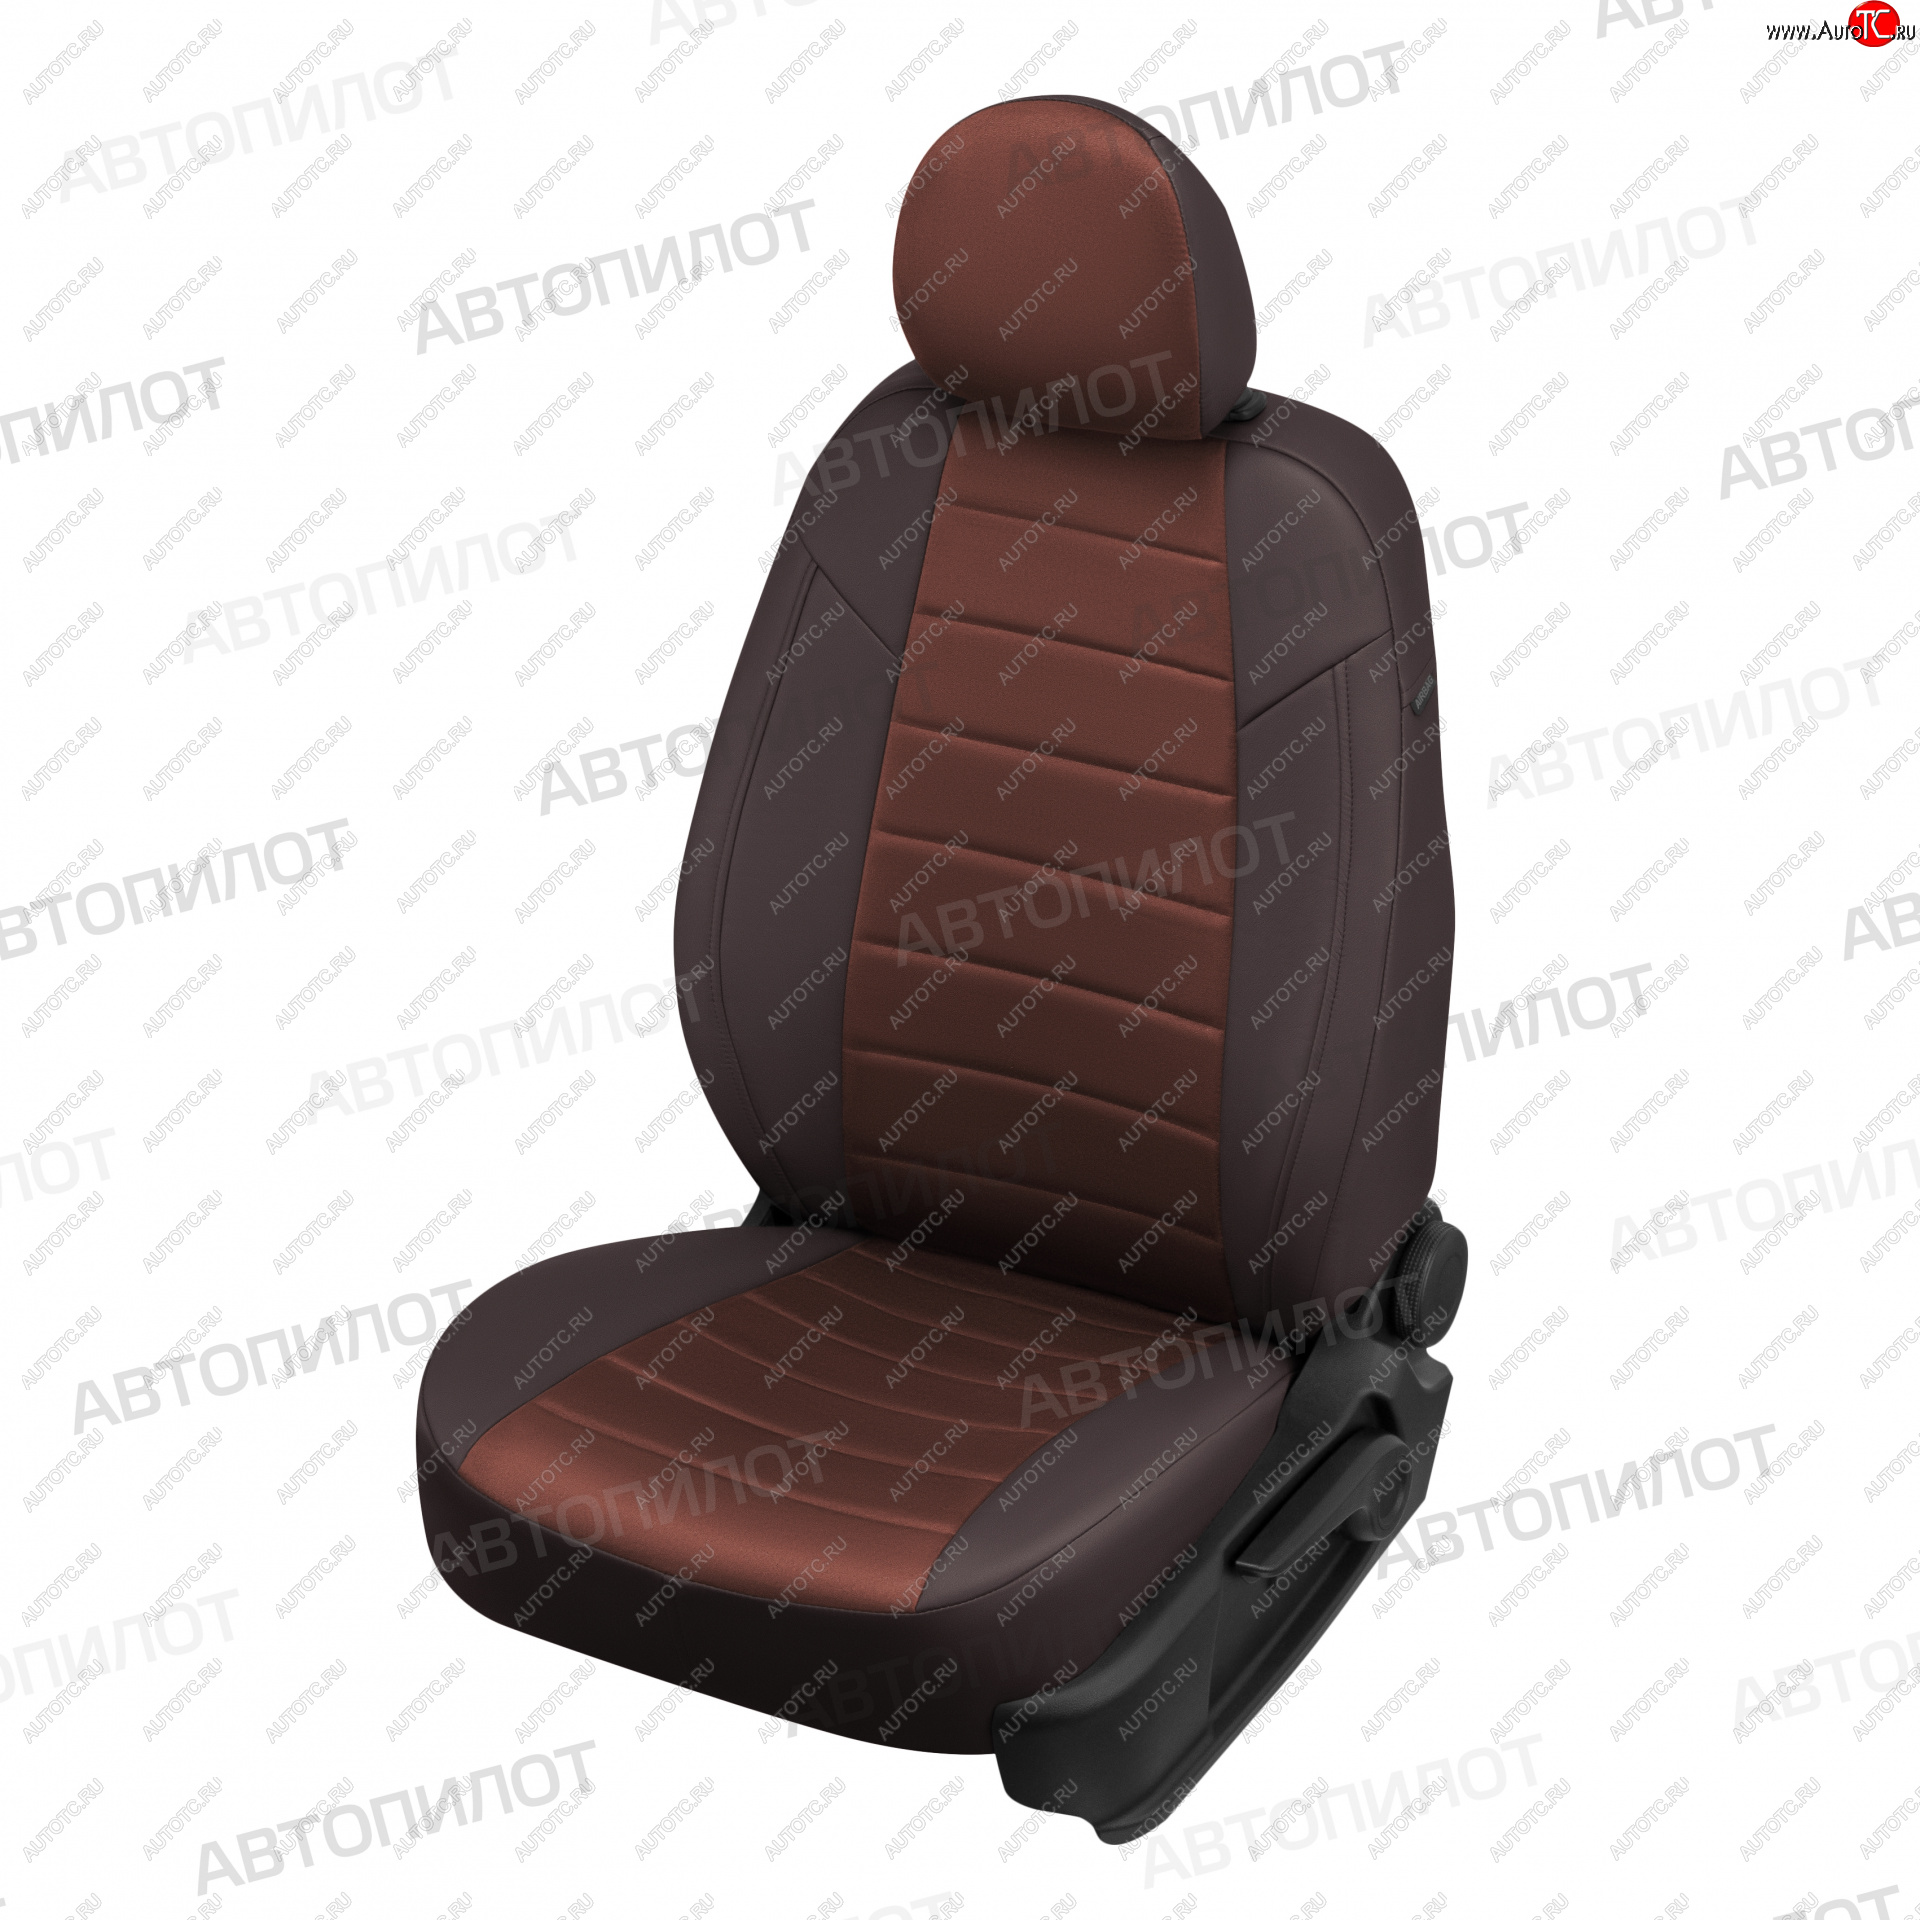 13 449 р. Чехлы сидений (экокожа/алькантара) Автопилот  Hyundai Santa Fe  3 DM (2012-2019) (шоколад)